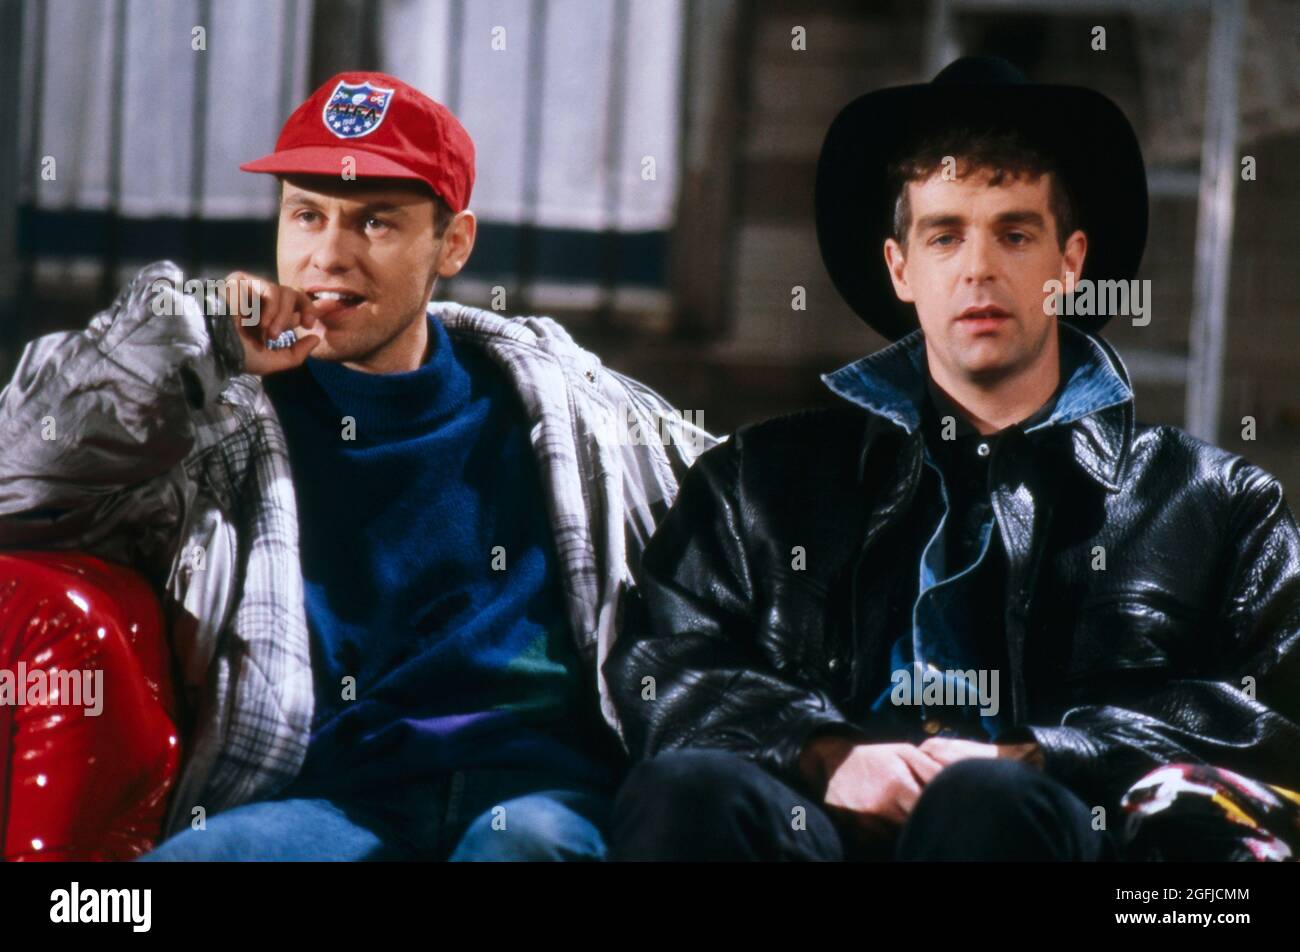 Pet Shop Boys, britisches Elektropop Duo, Neil Tennant und Chris Lowe, Bild  circa 1985. Pet Shop Boys, Neil Tennant and Chris Lowe, British Electropop  Duo, photo circa 1985 Stock Photo - Alamy